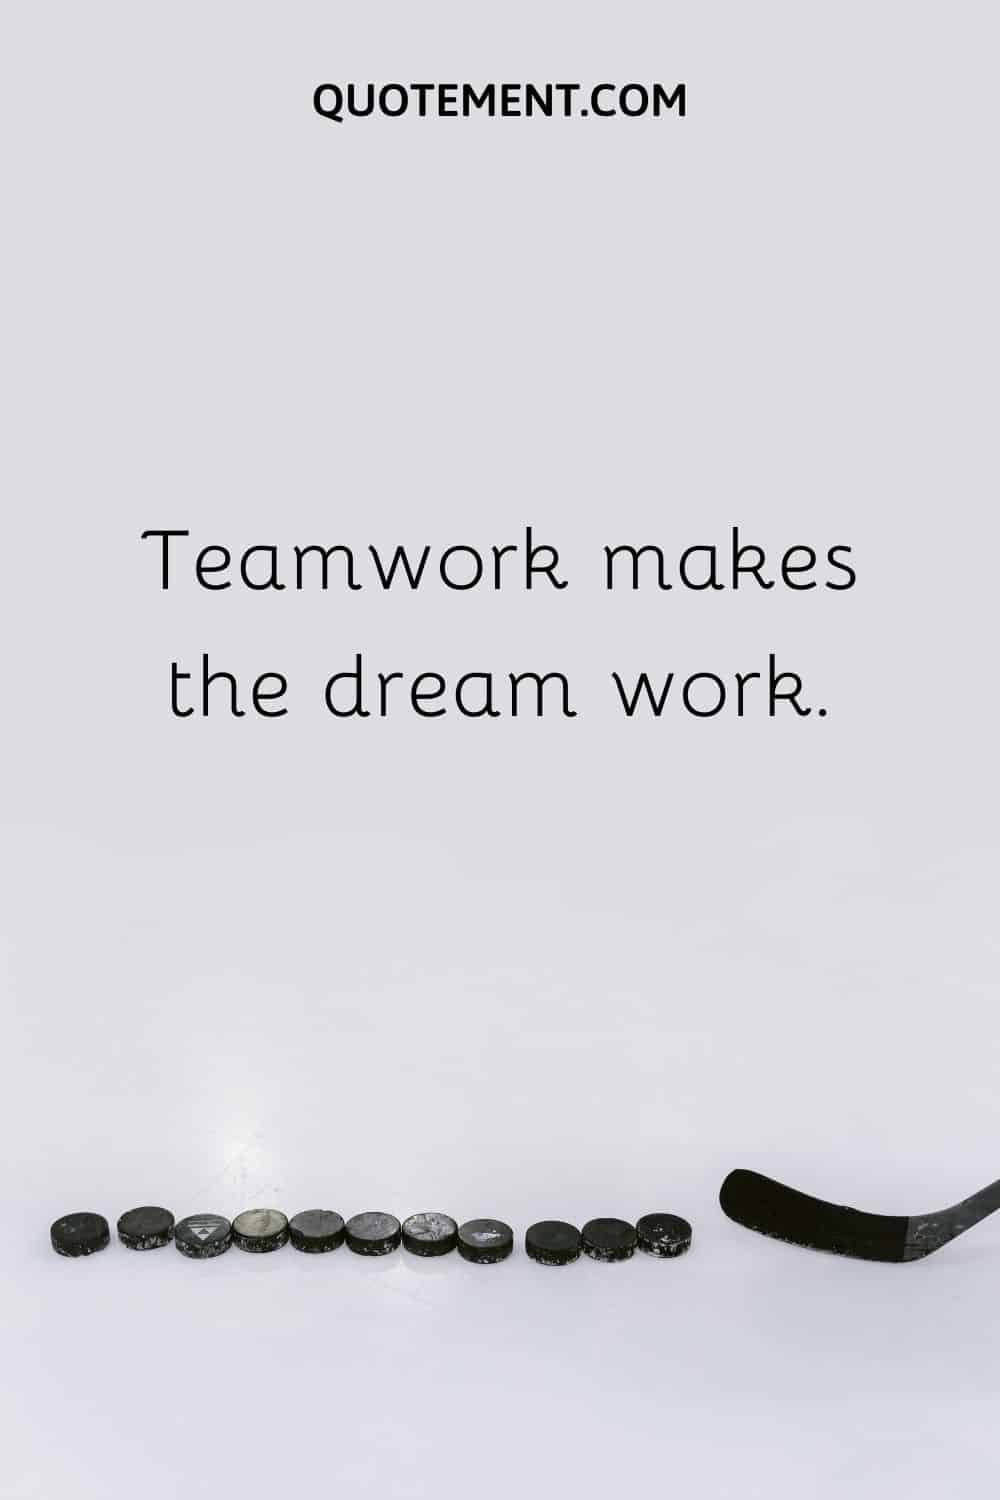 Teamwork makes the dream work.